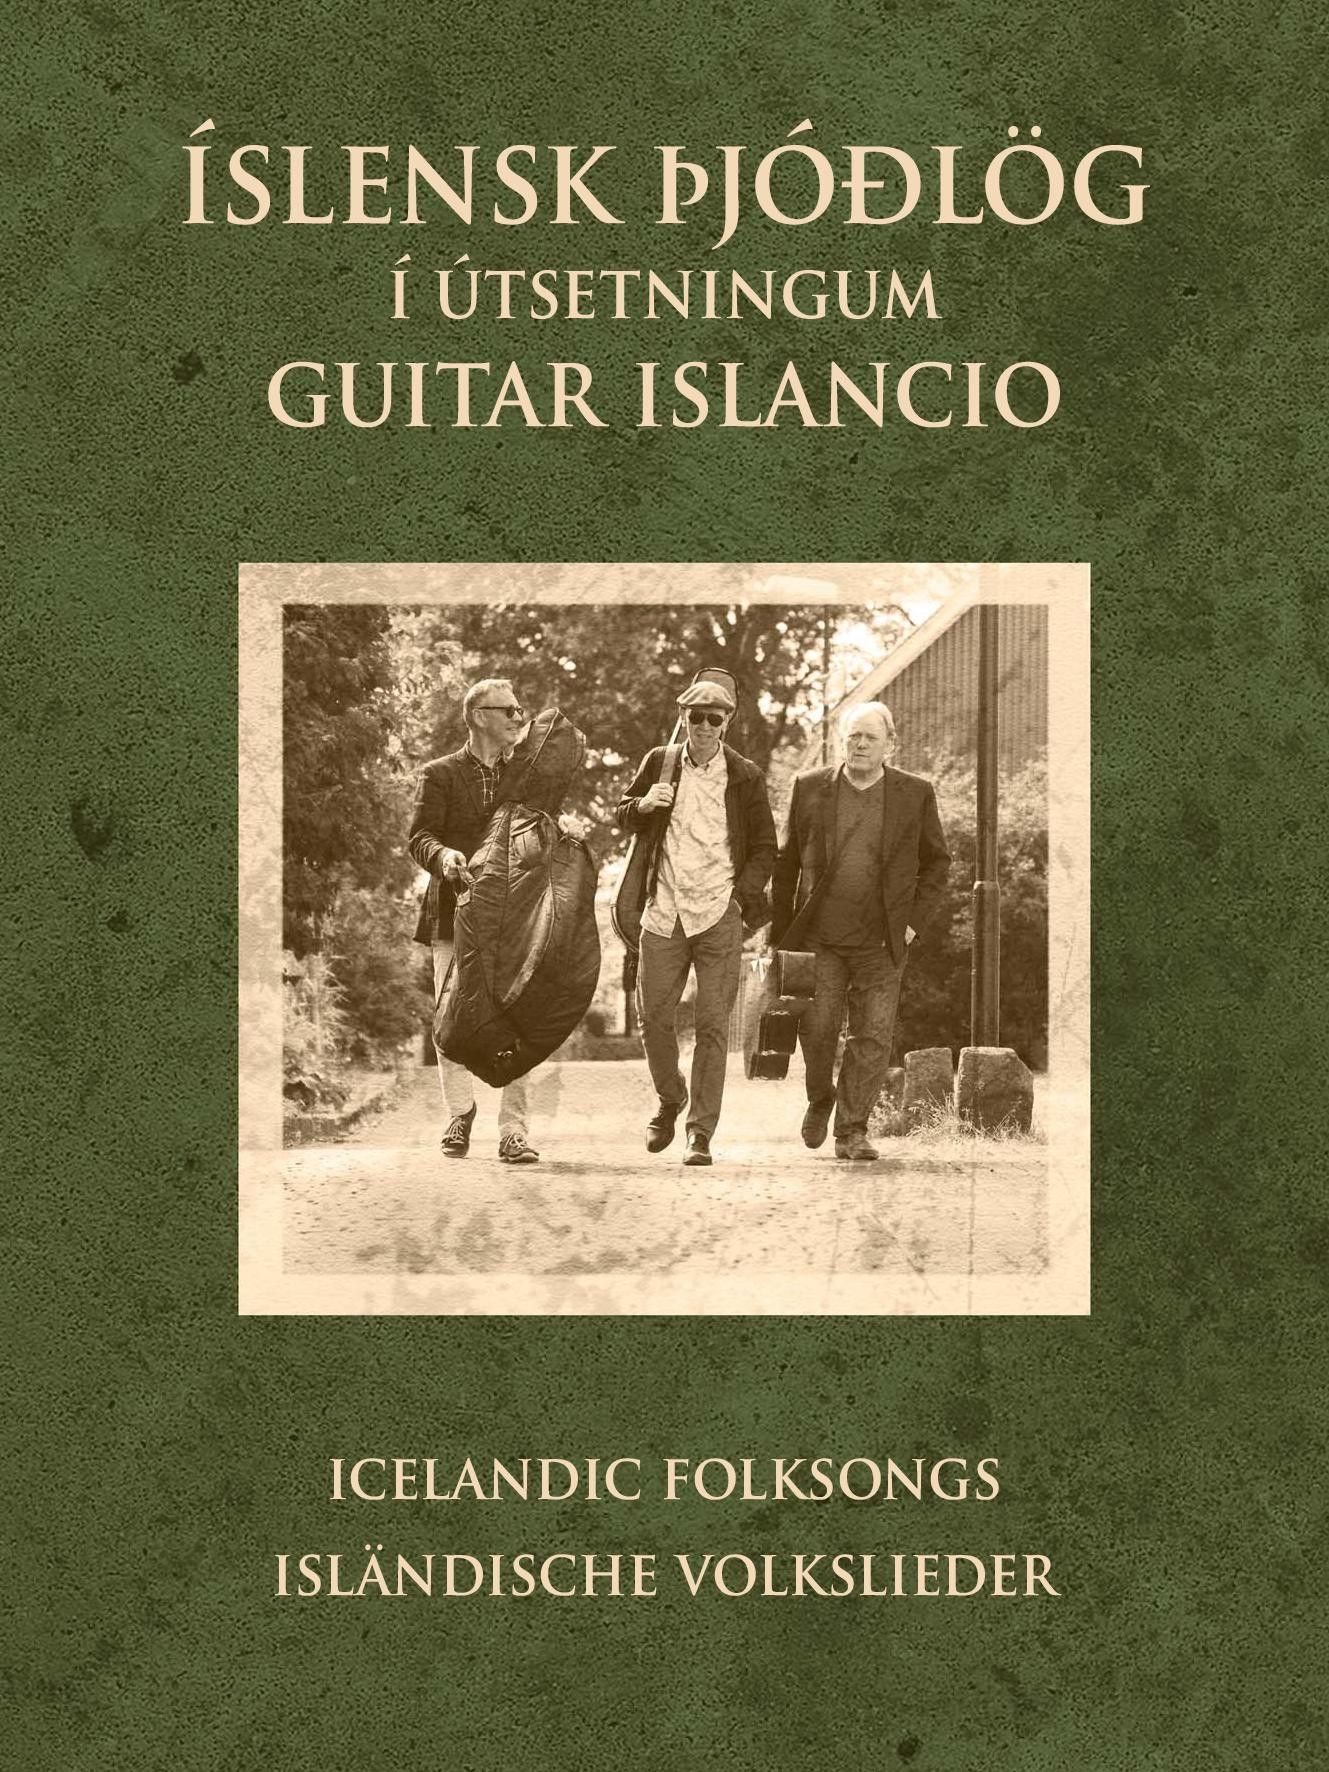 guitar islancio music book 